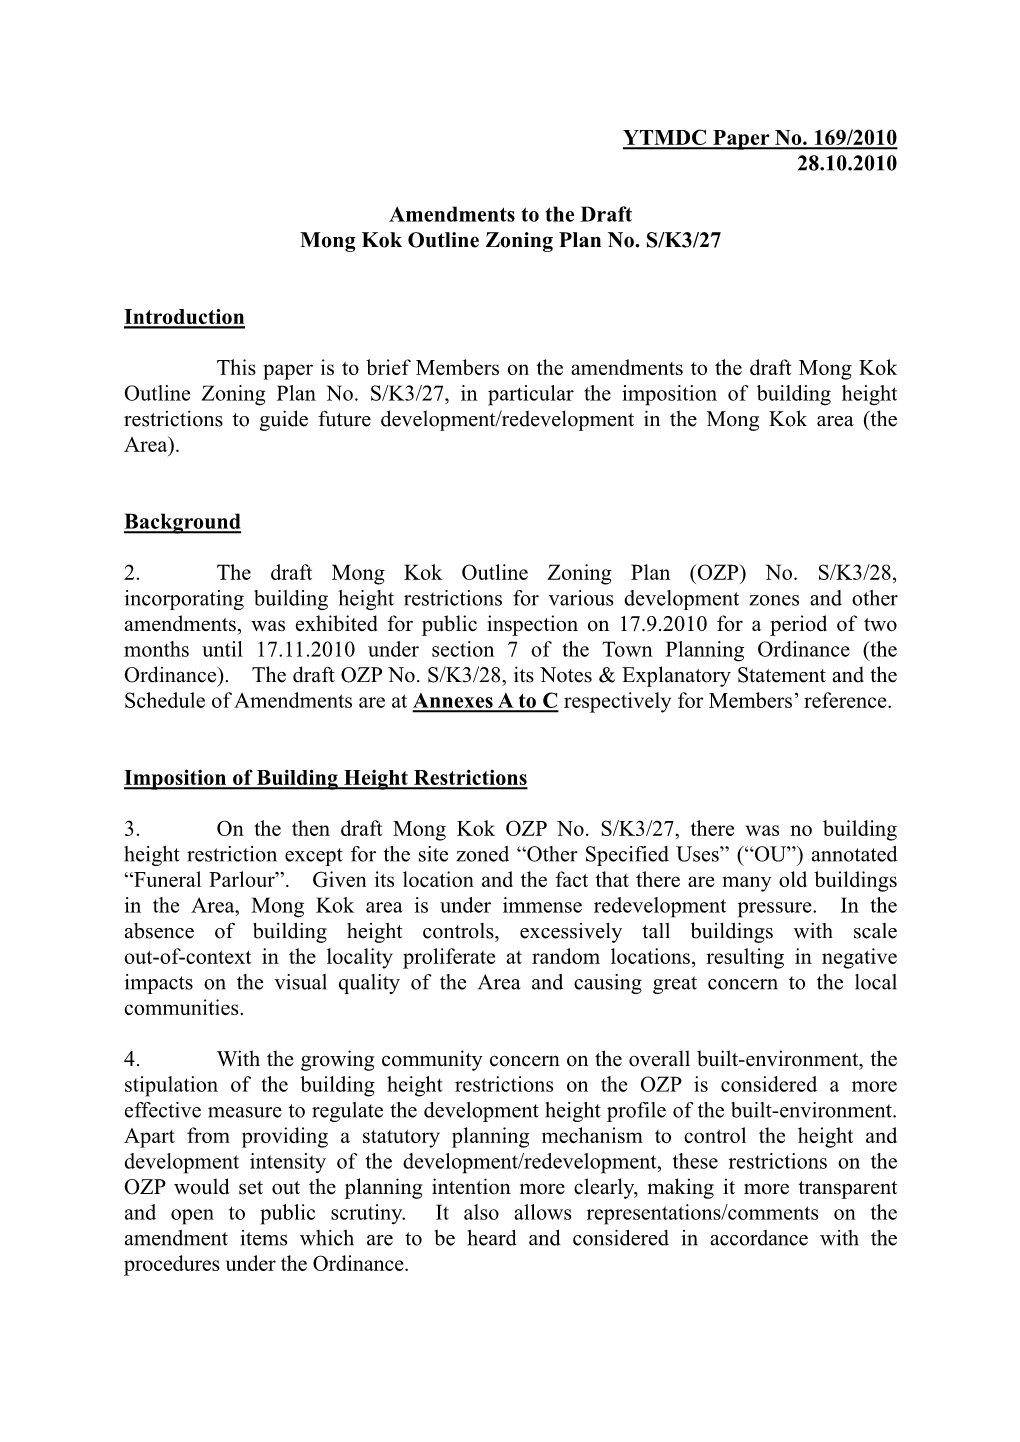 YTMDC Paper No. 169/2010 28.10.2010 Amendments to The